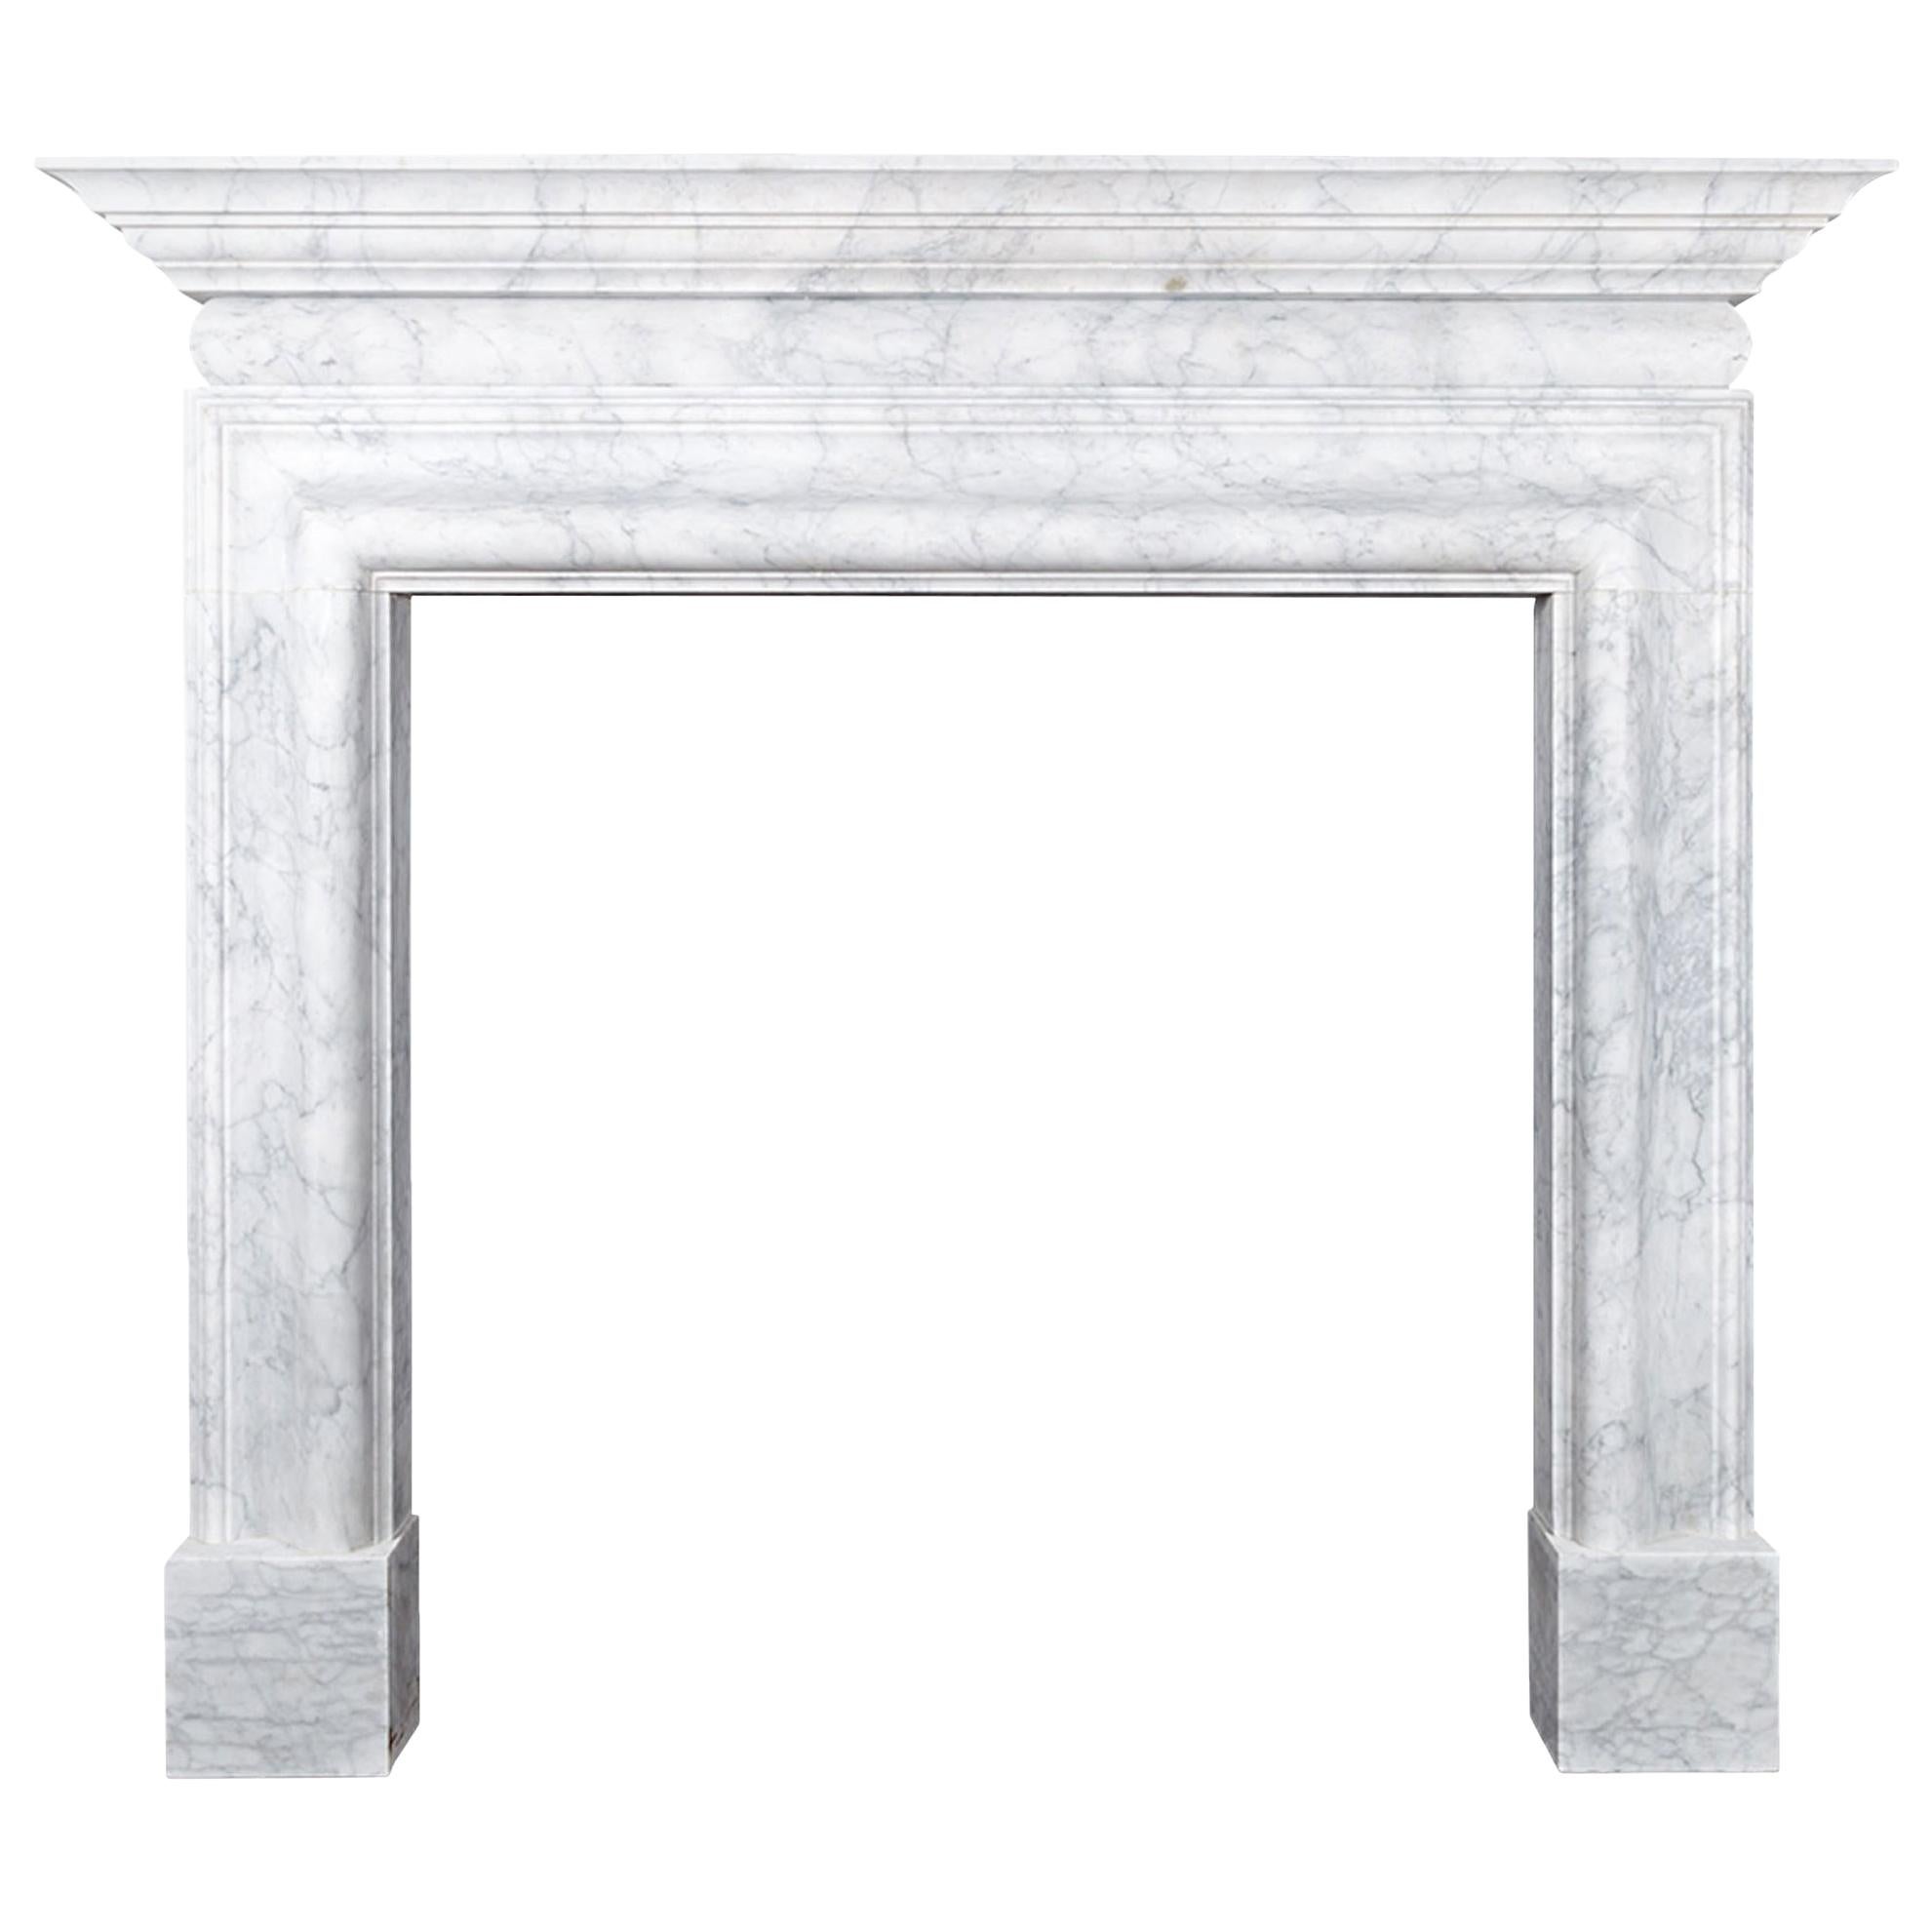 Ryan & Smith Italian Carrara Marble Fireplace For Sale